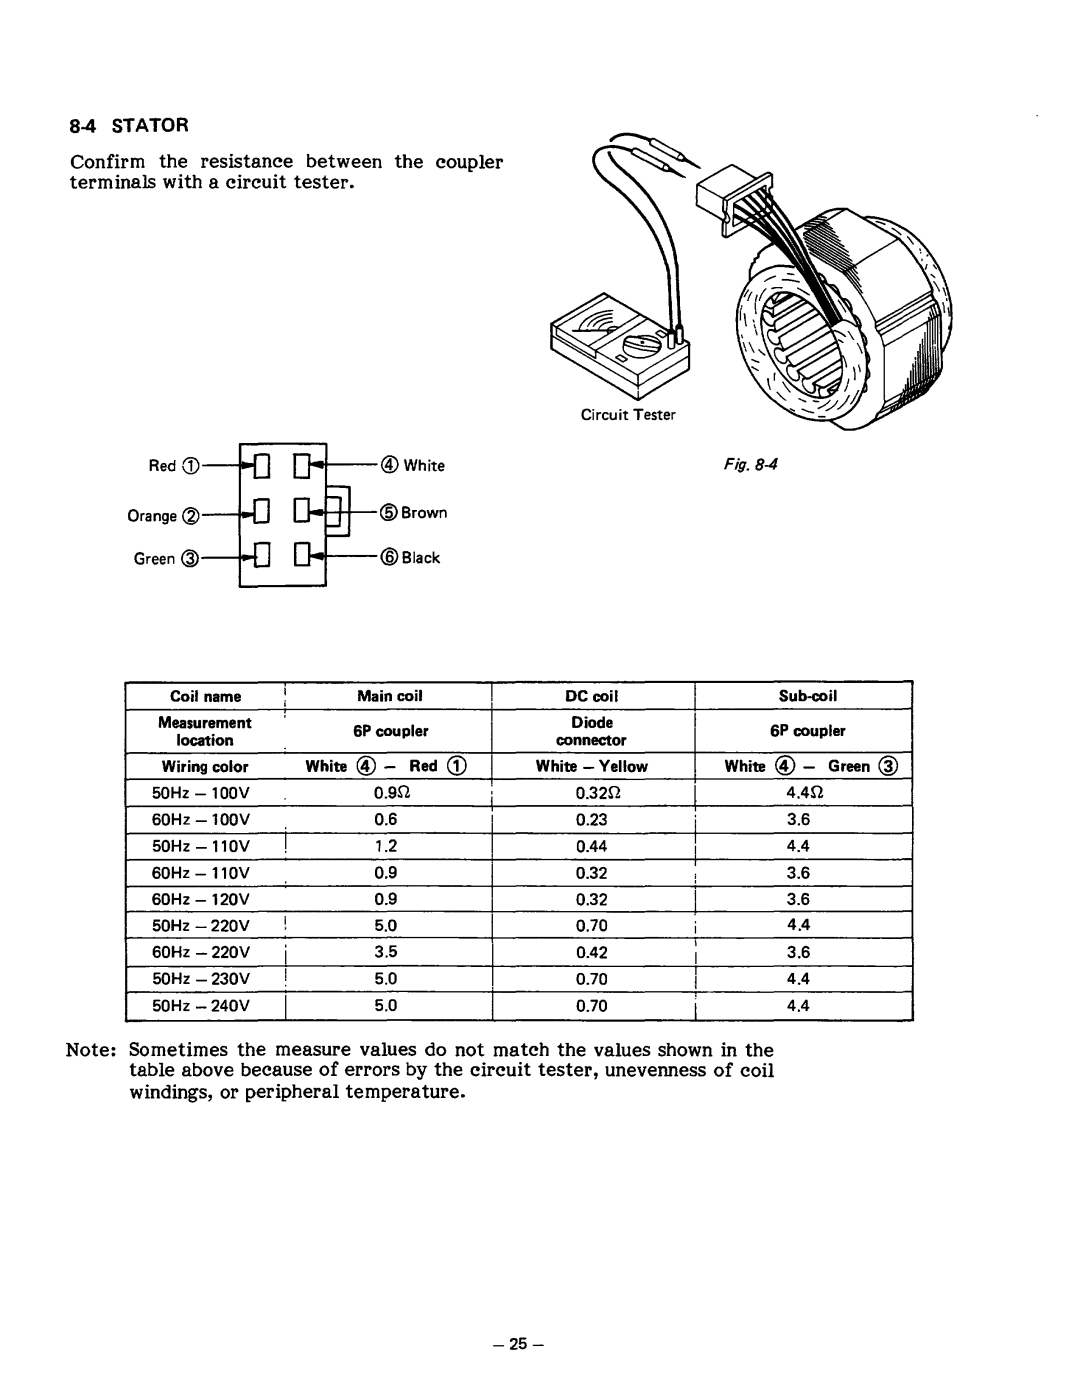 Subaru Robin Power Products R1200 service manual windings, or peripheral temperature, Stator 